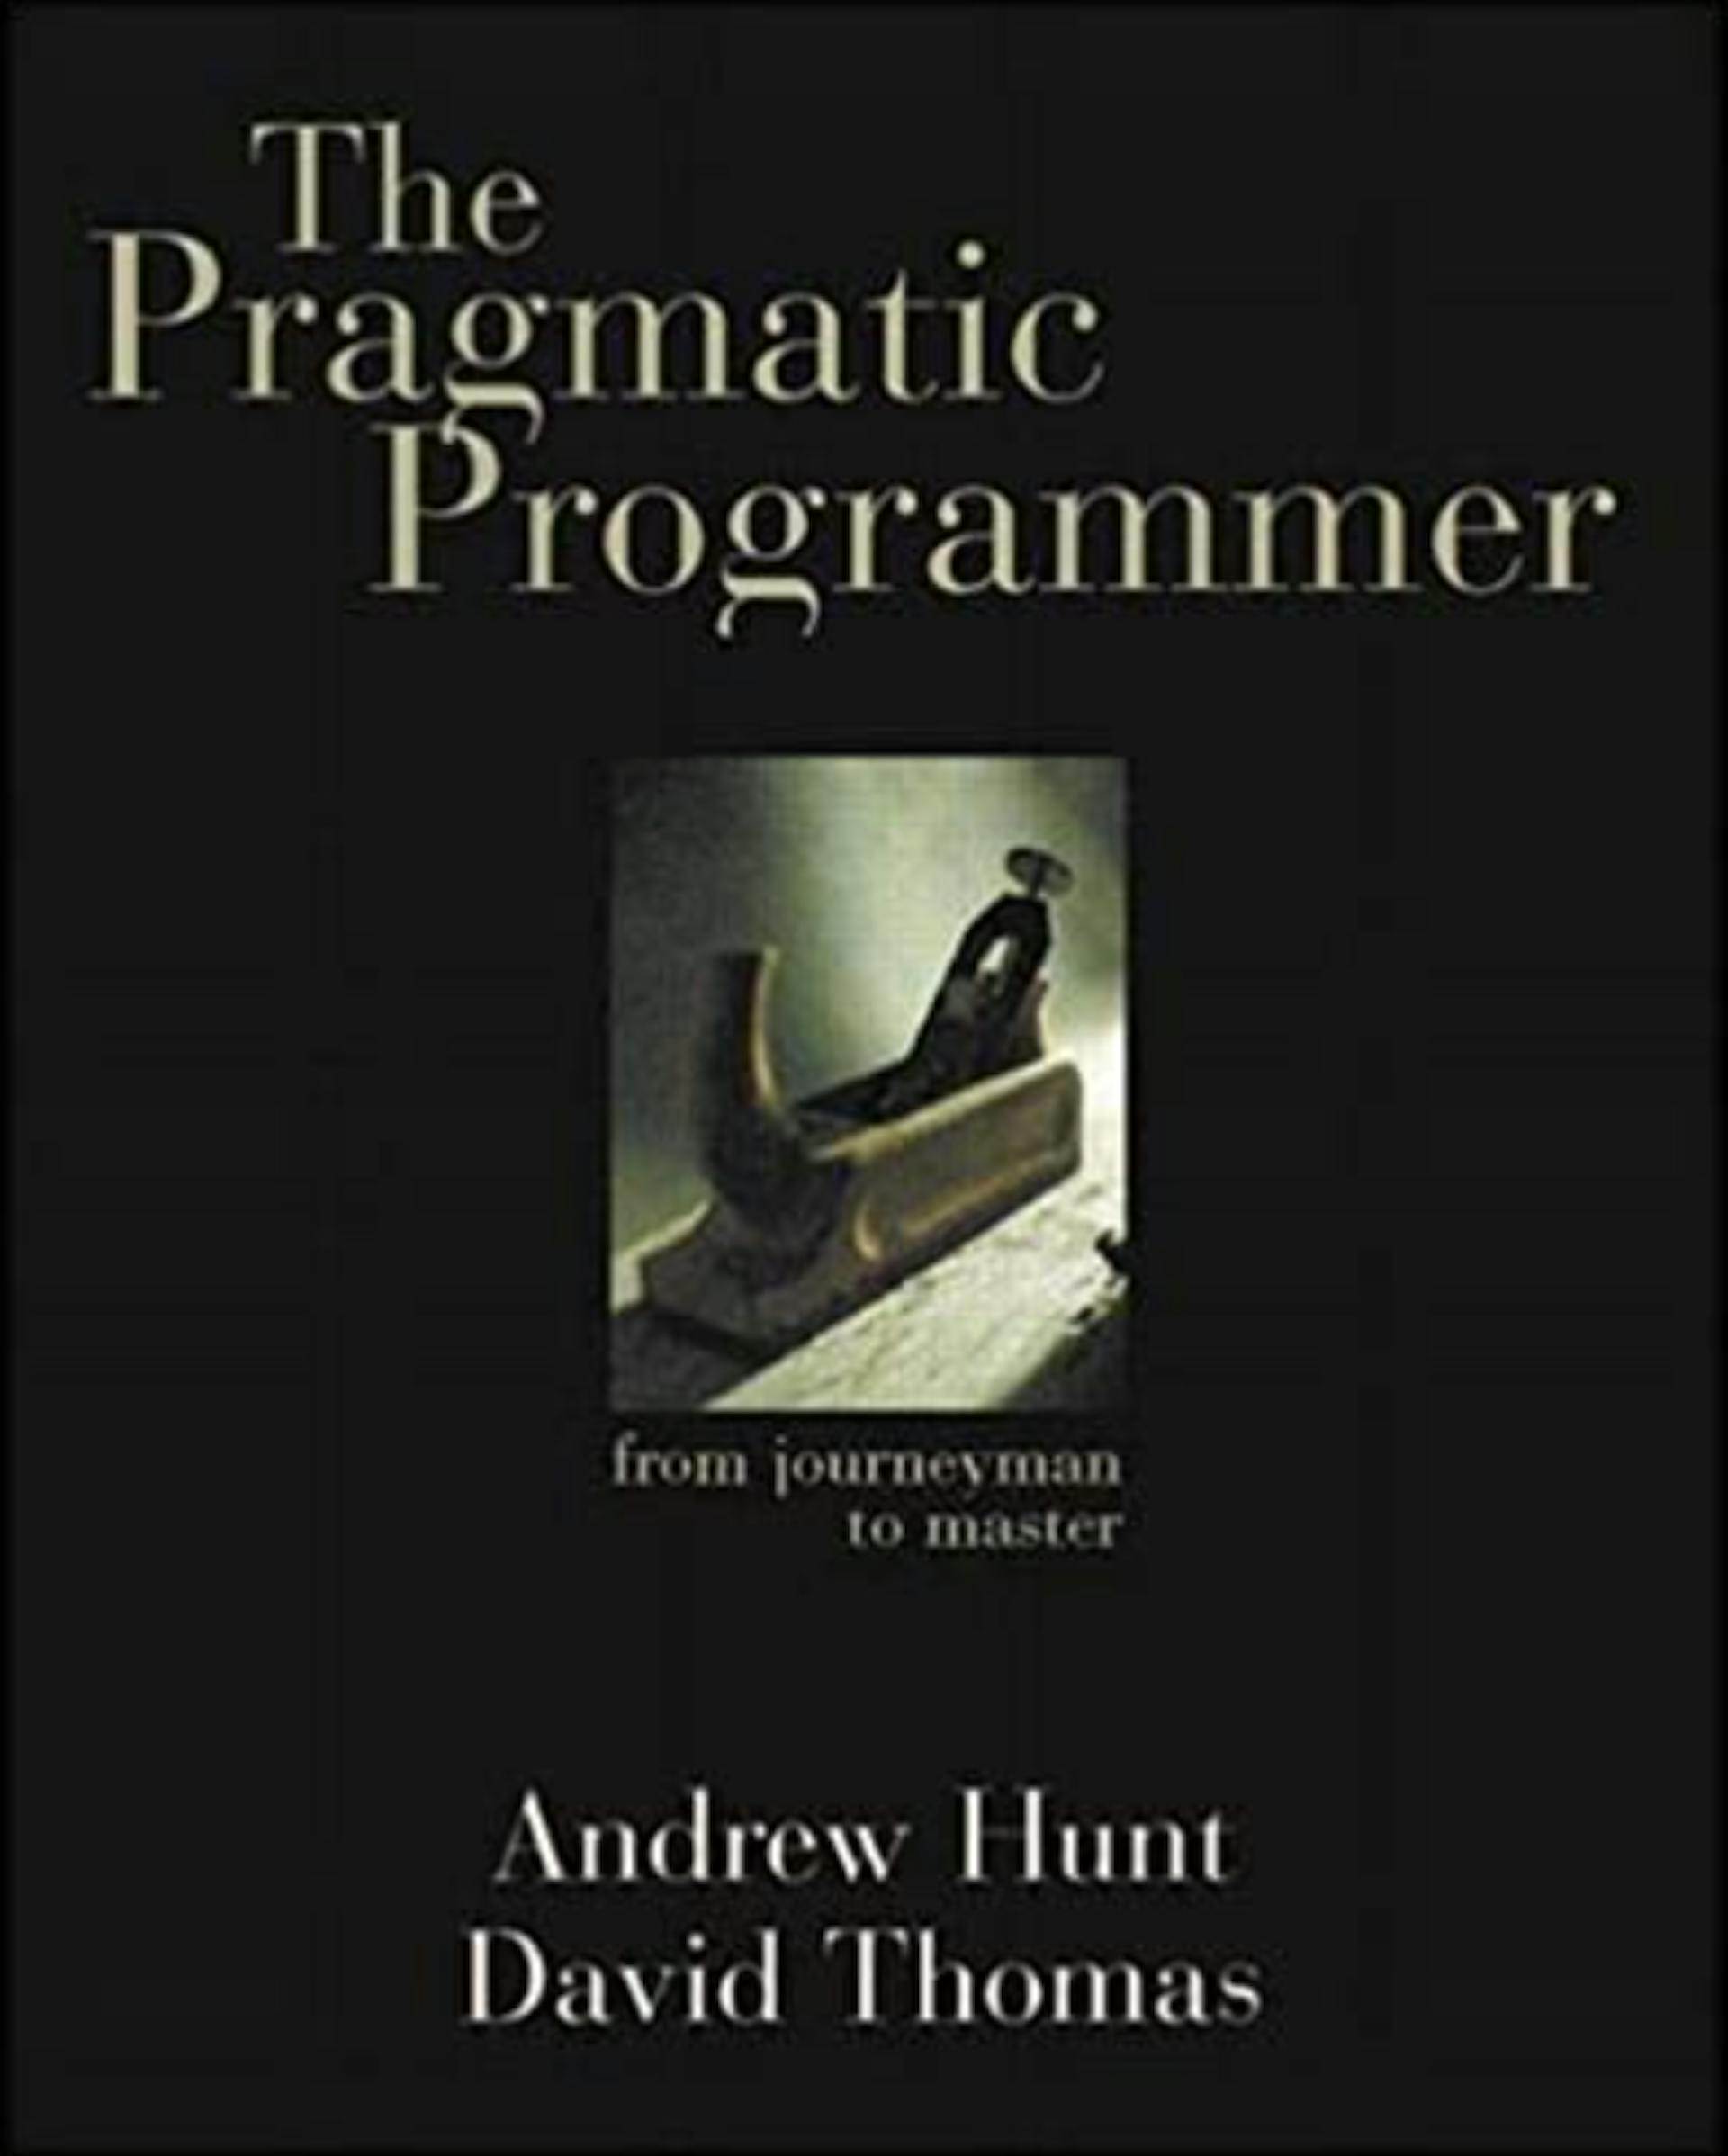 The Pragmatic Programmer book